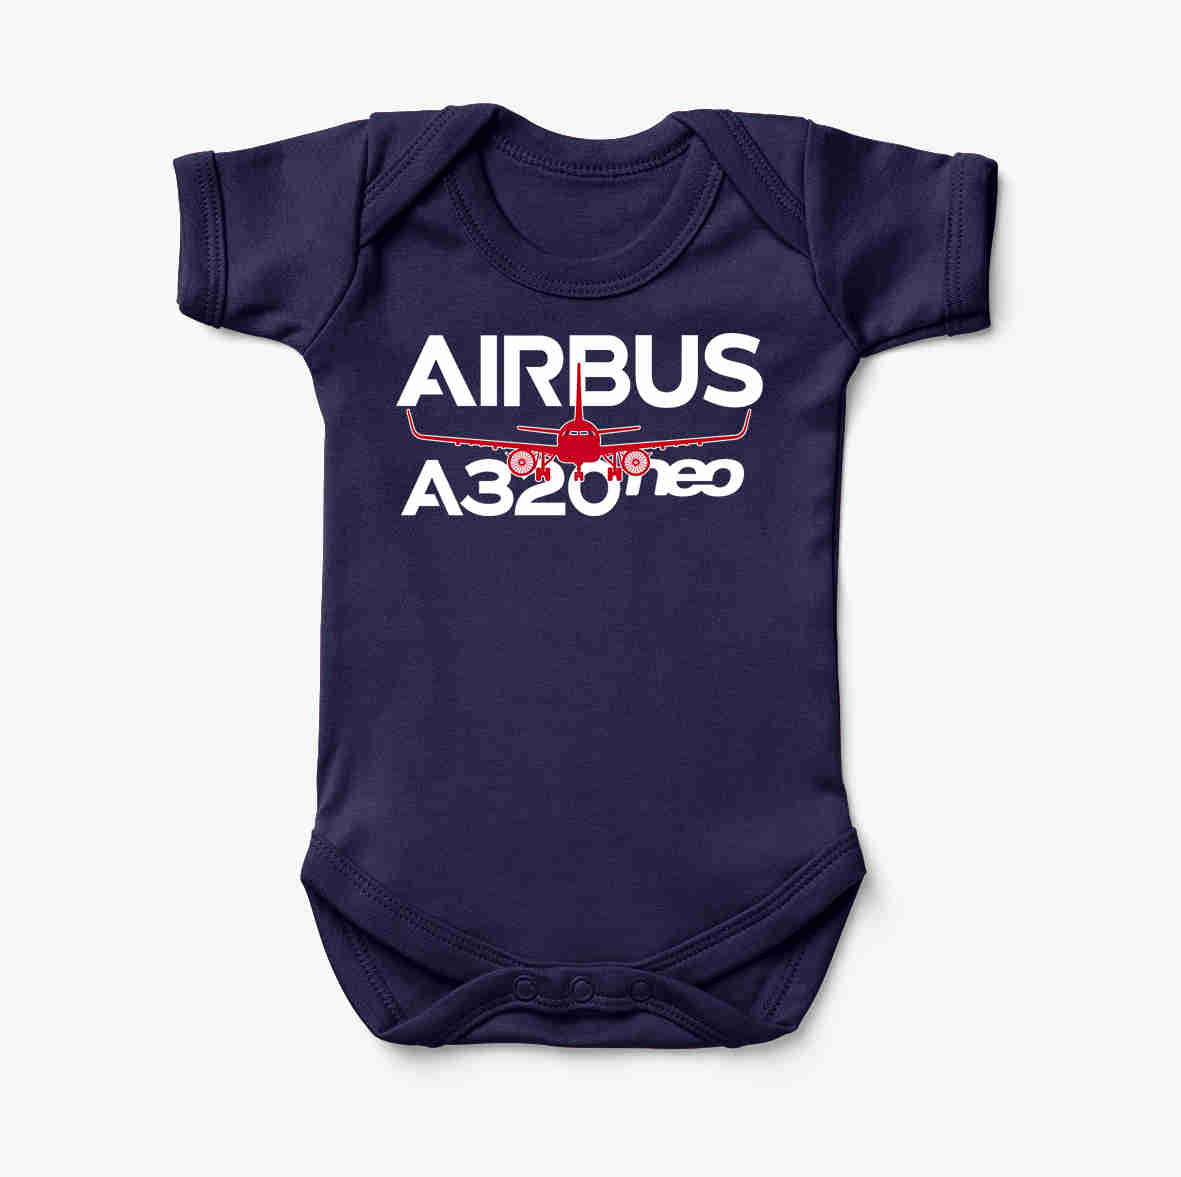 Amazing Airbus A320neo Designed Baby Bodysuits